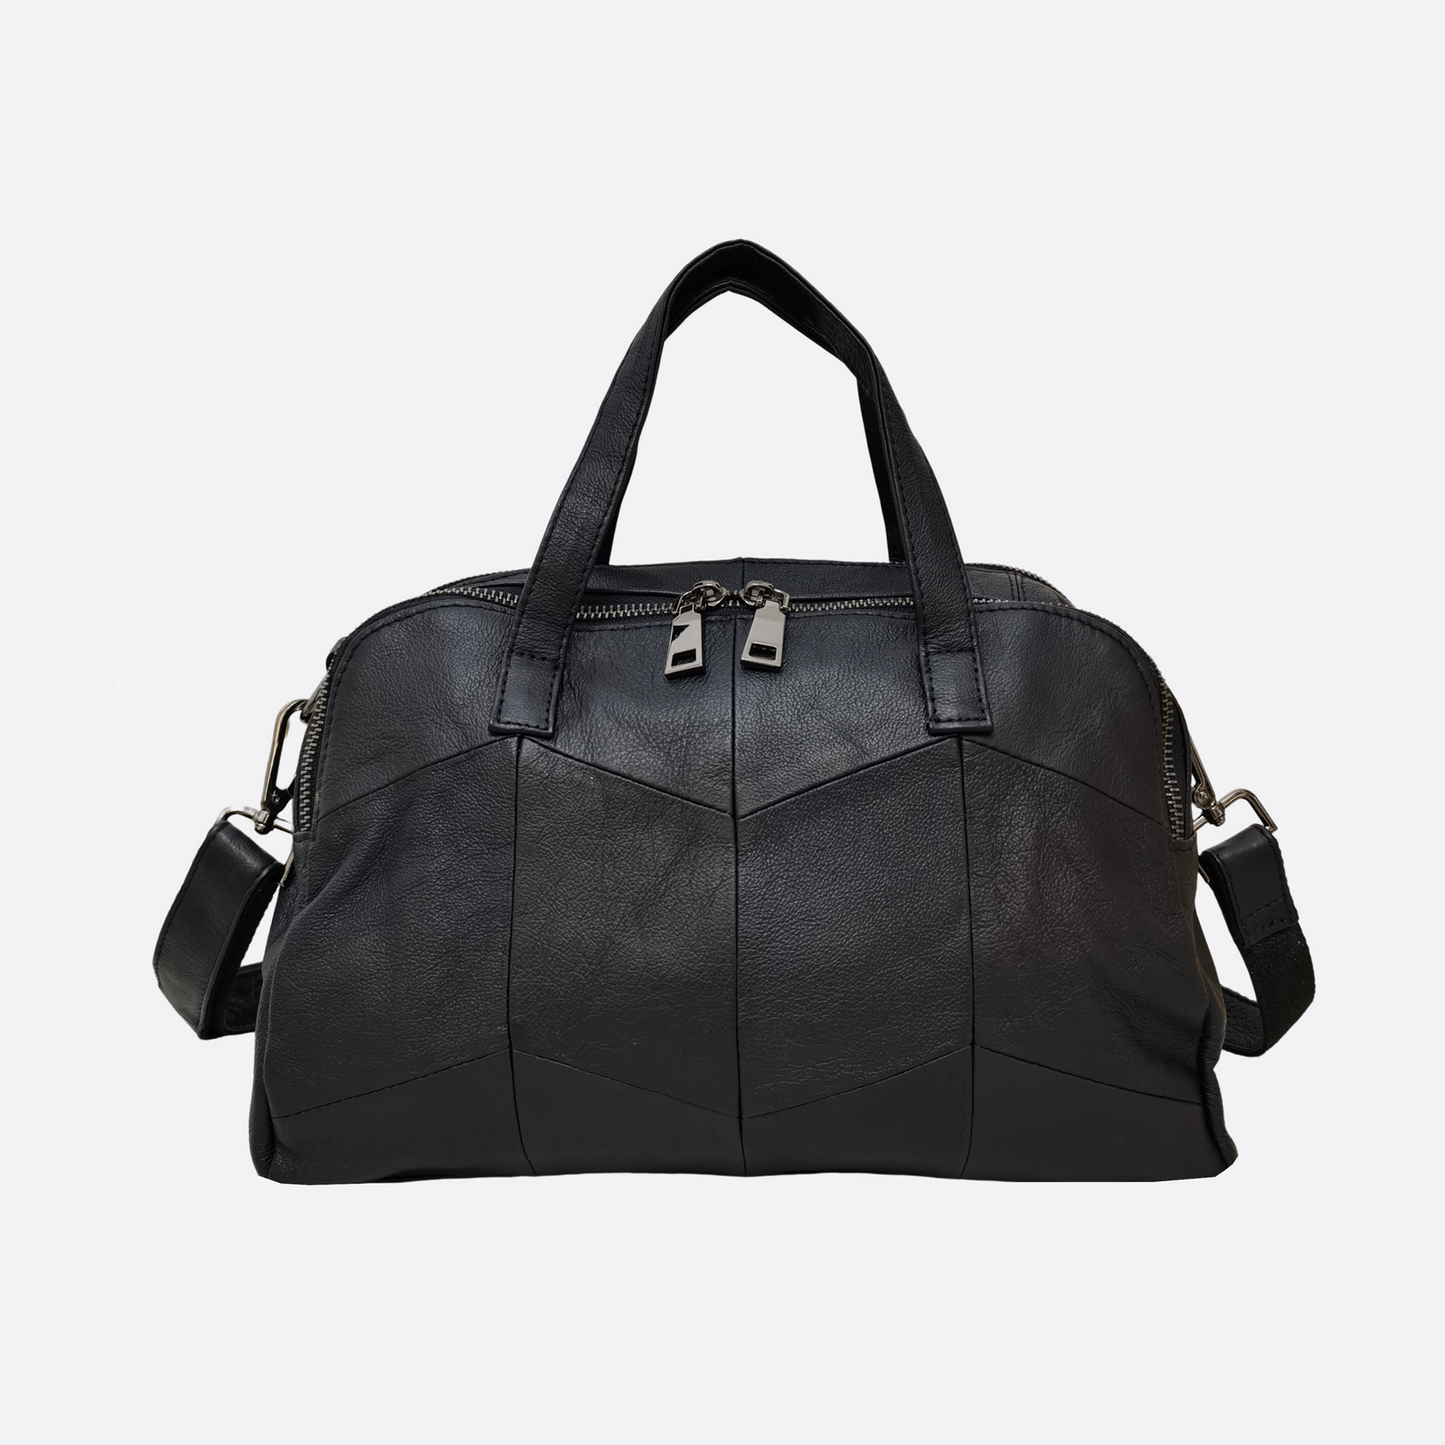 Women's genuine cowhide leather handbag Demi V2 design